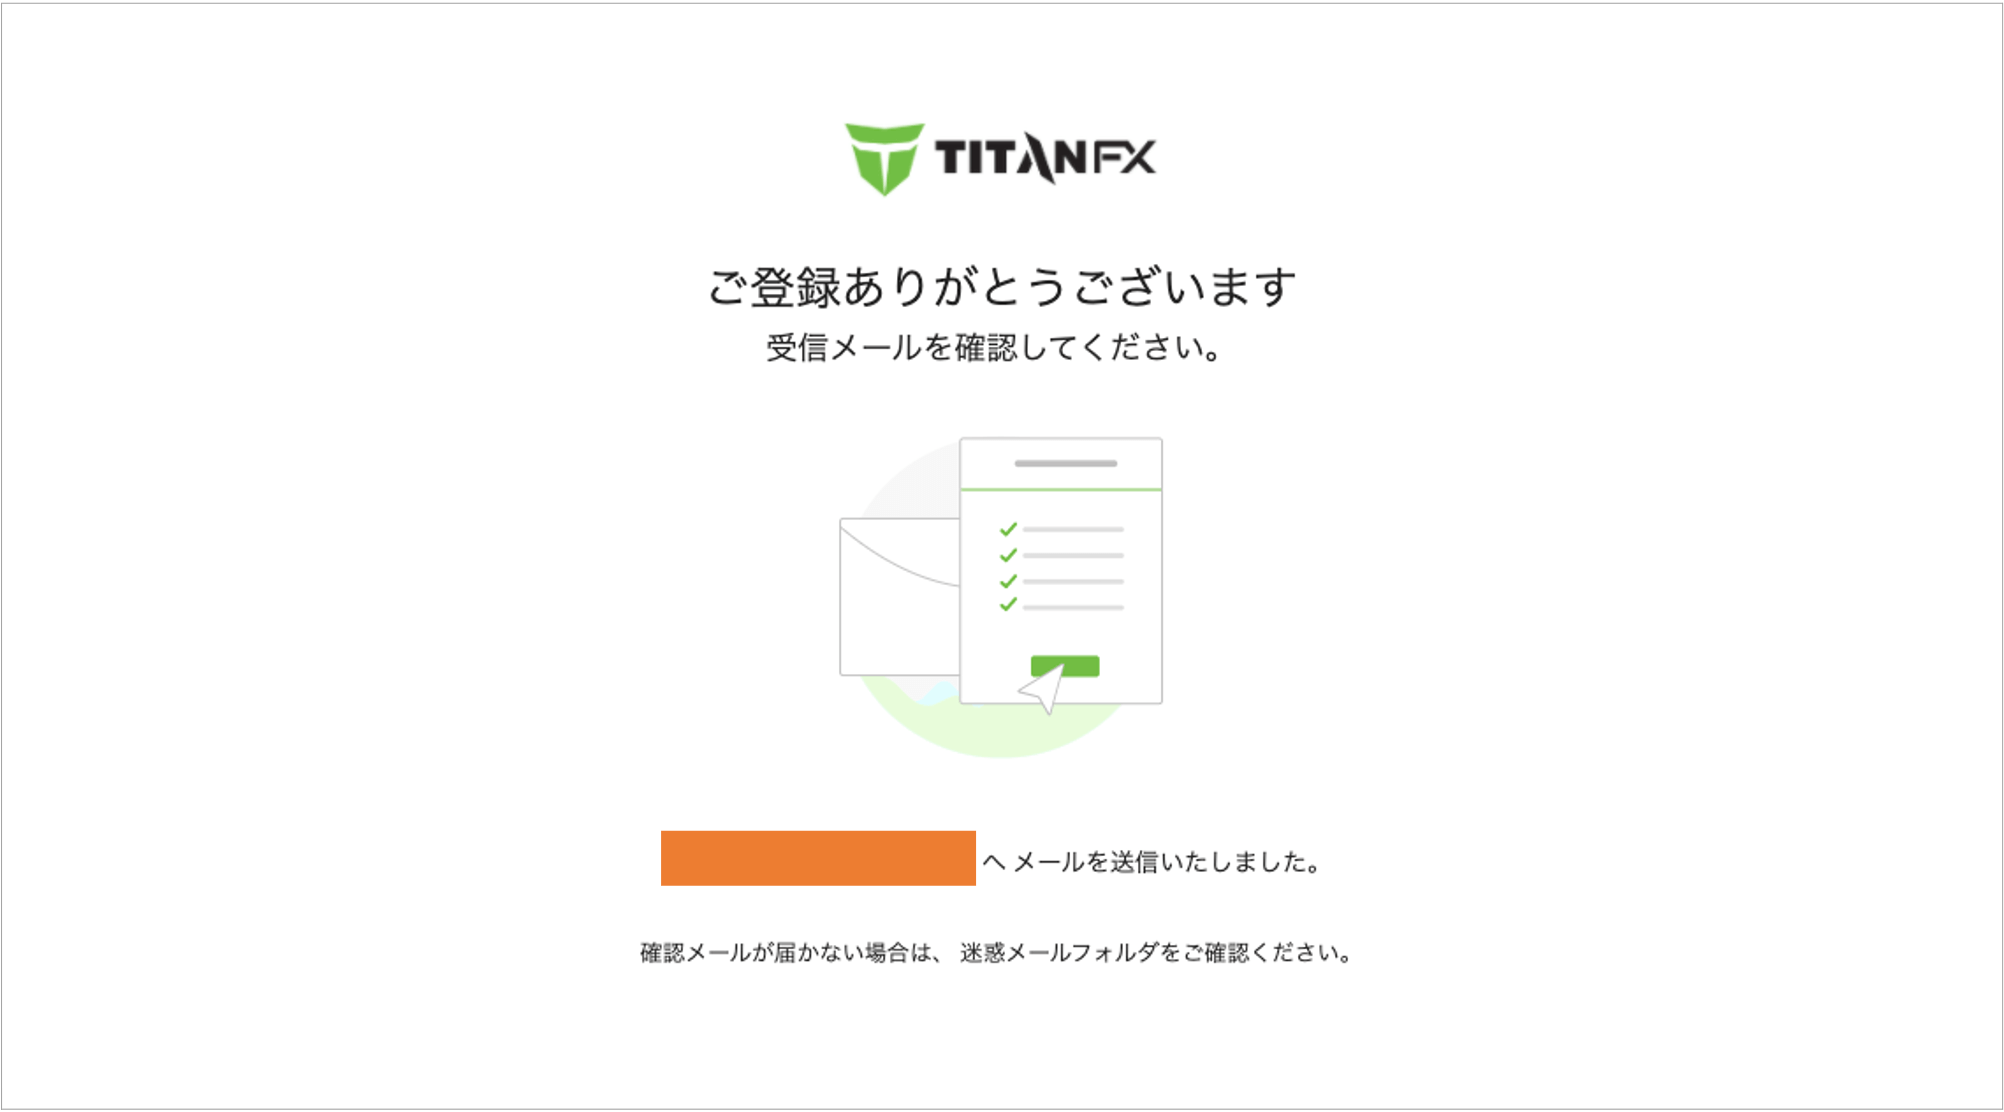 TitanFX 登録完了